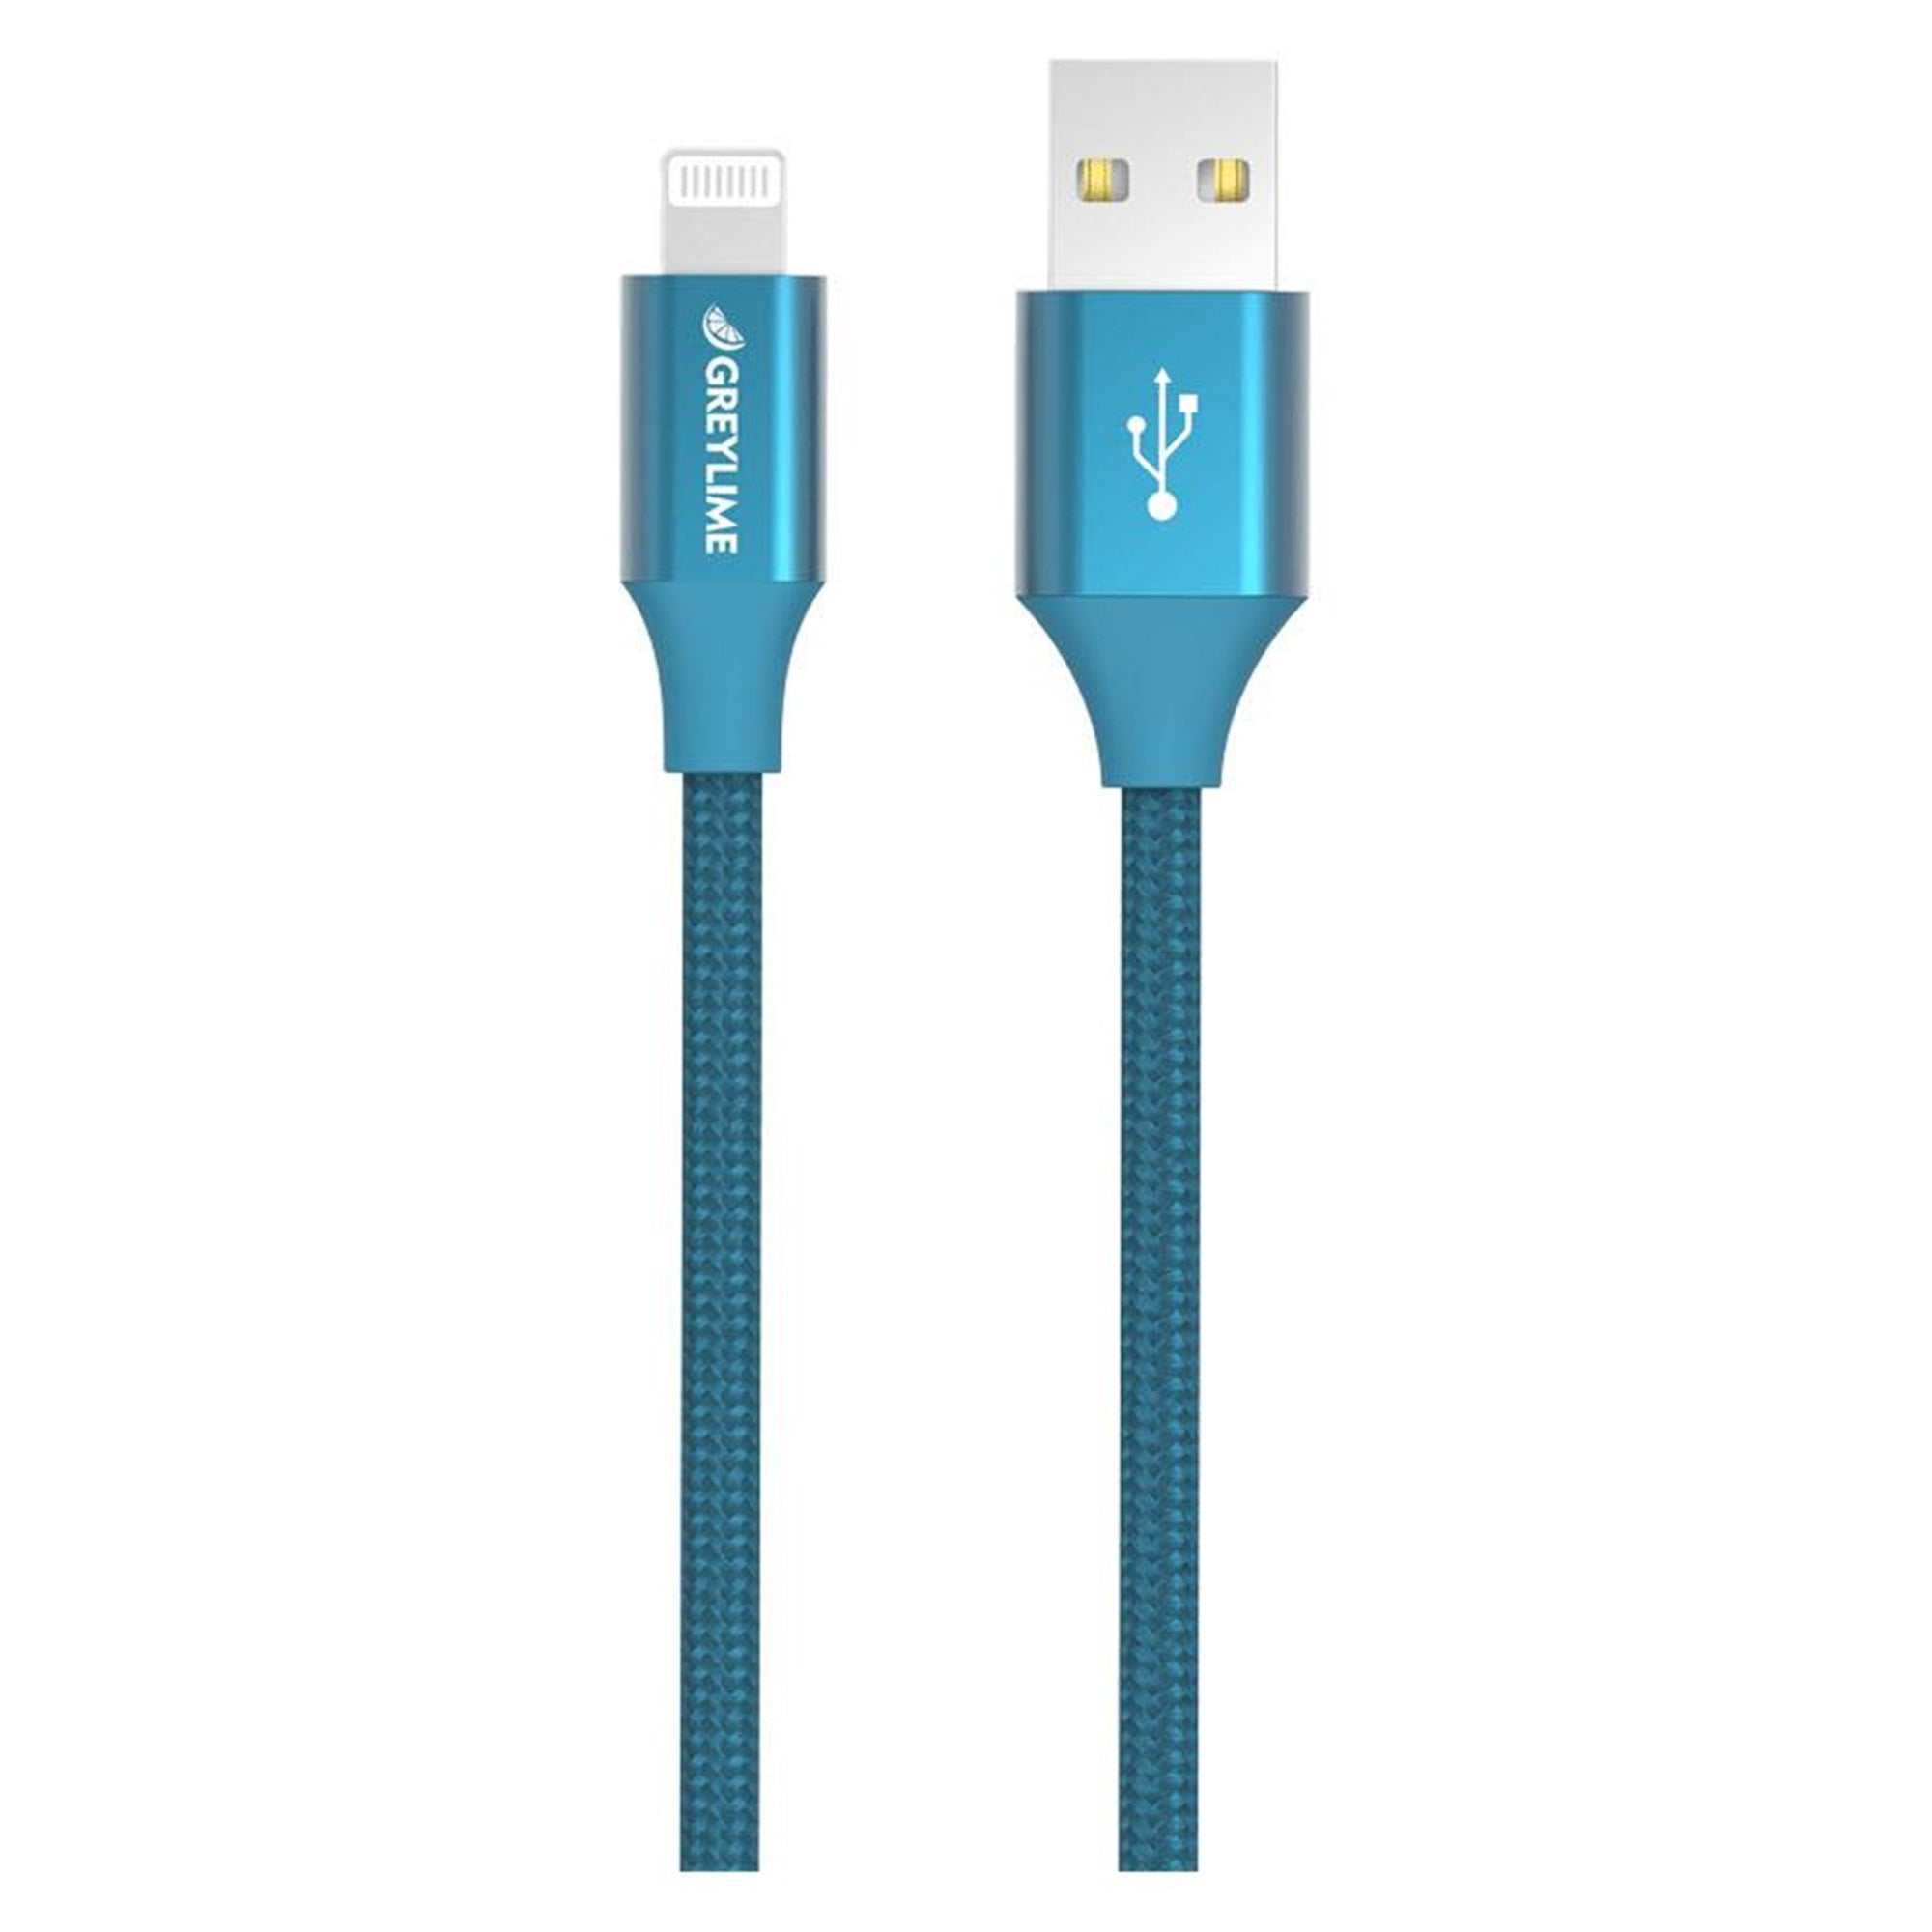 C21AL1M01-GreyLime-Braided-USB-A-to-Lightning-Cable-Blaa-1-m_01.jpg